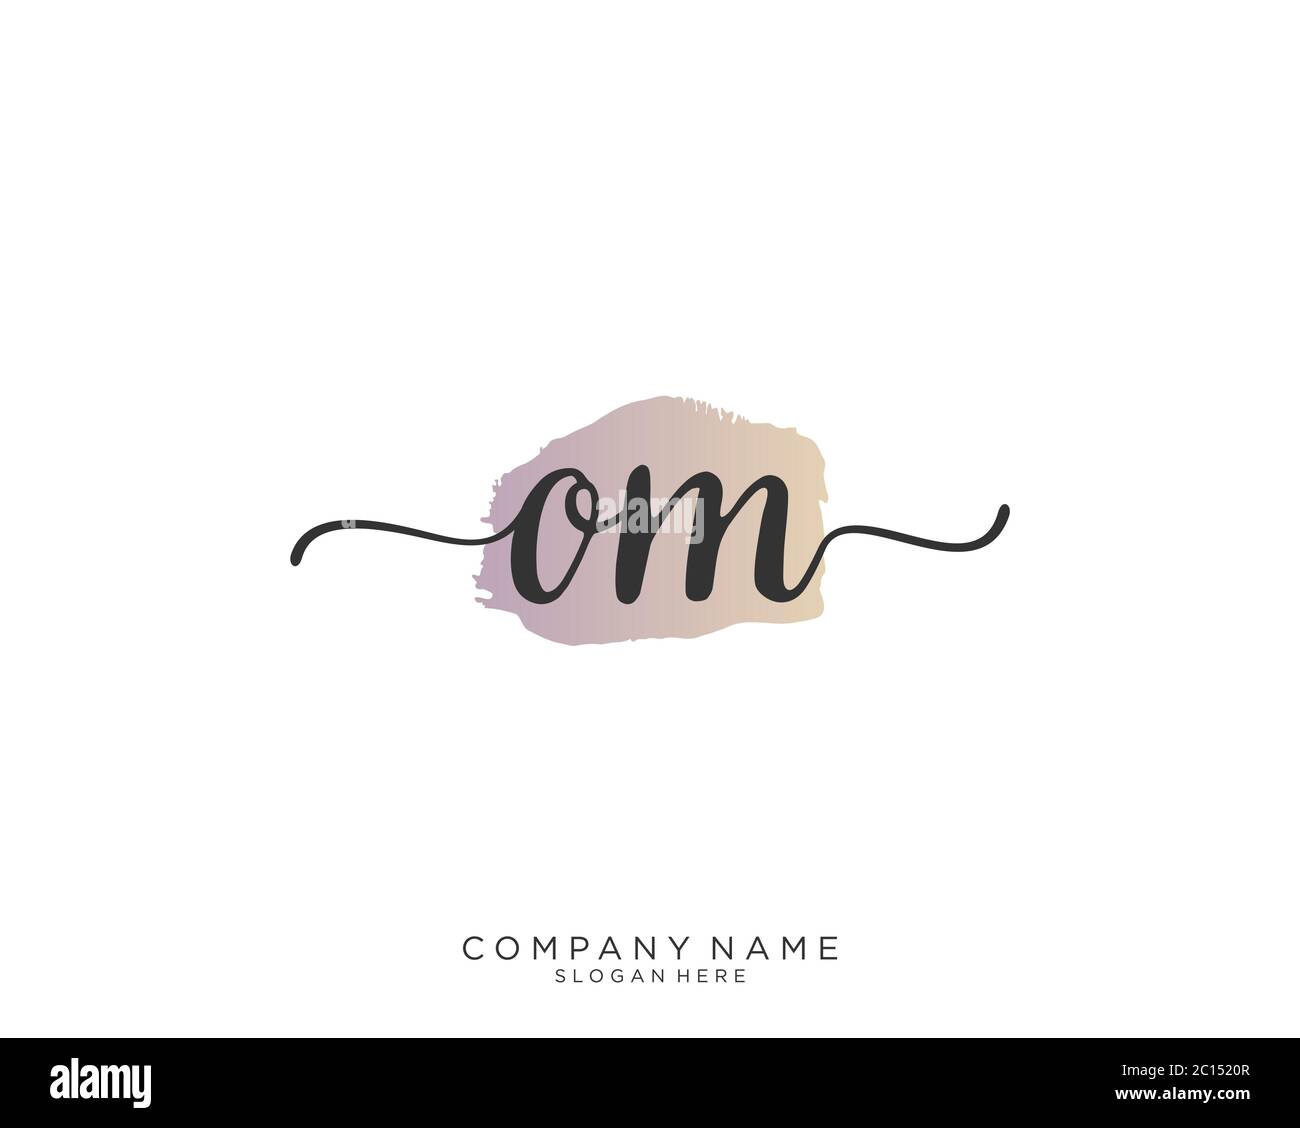 OM Initial handwriting logo vector Stock Vector